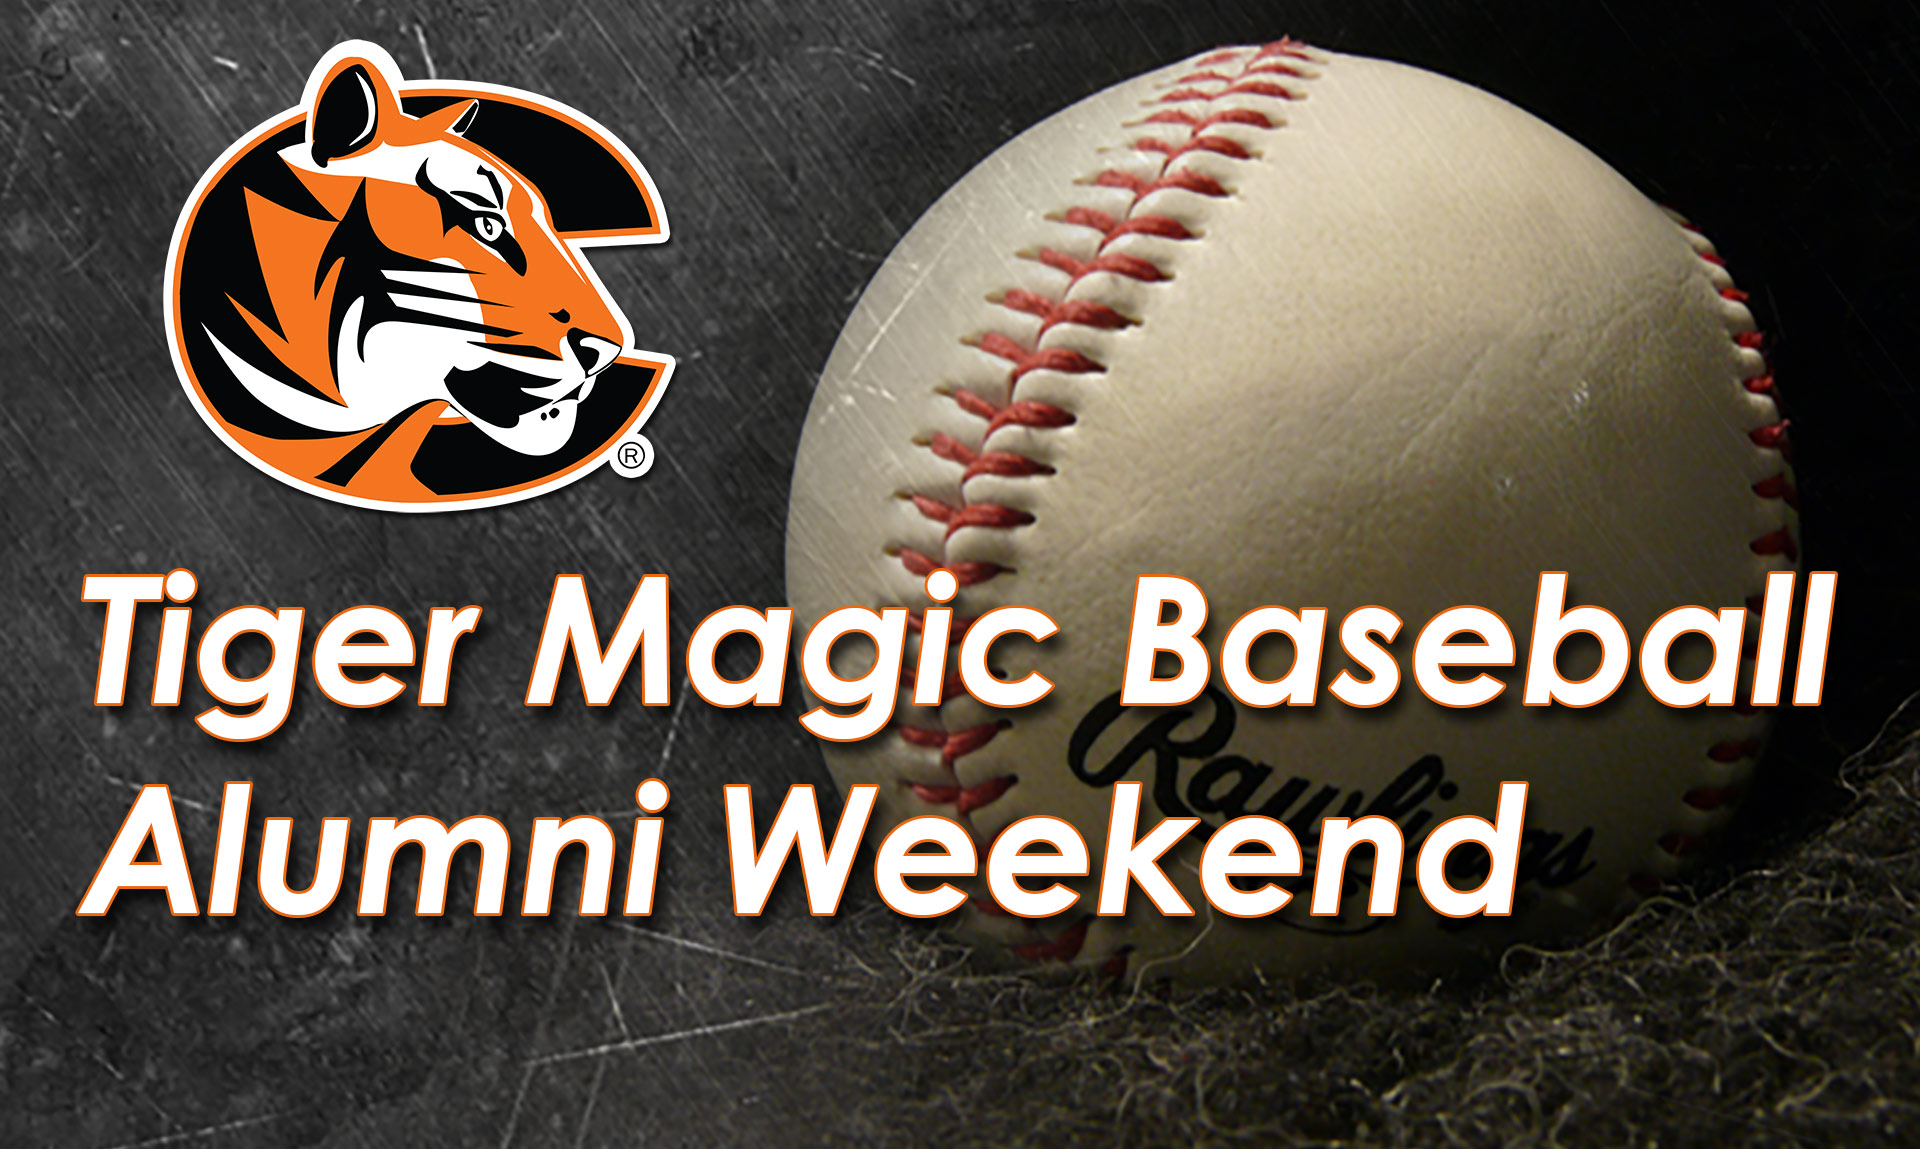 Tiger Magic Baseball Alumni Weekend offered